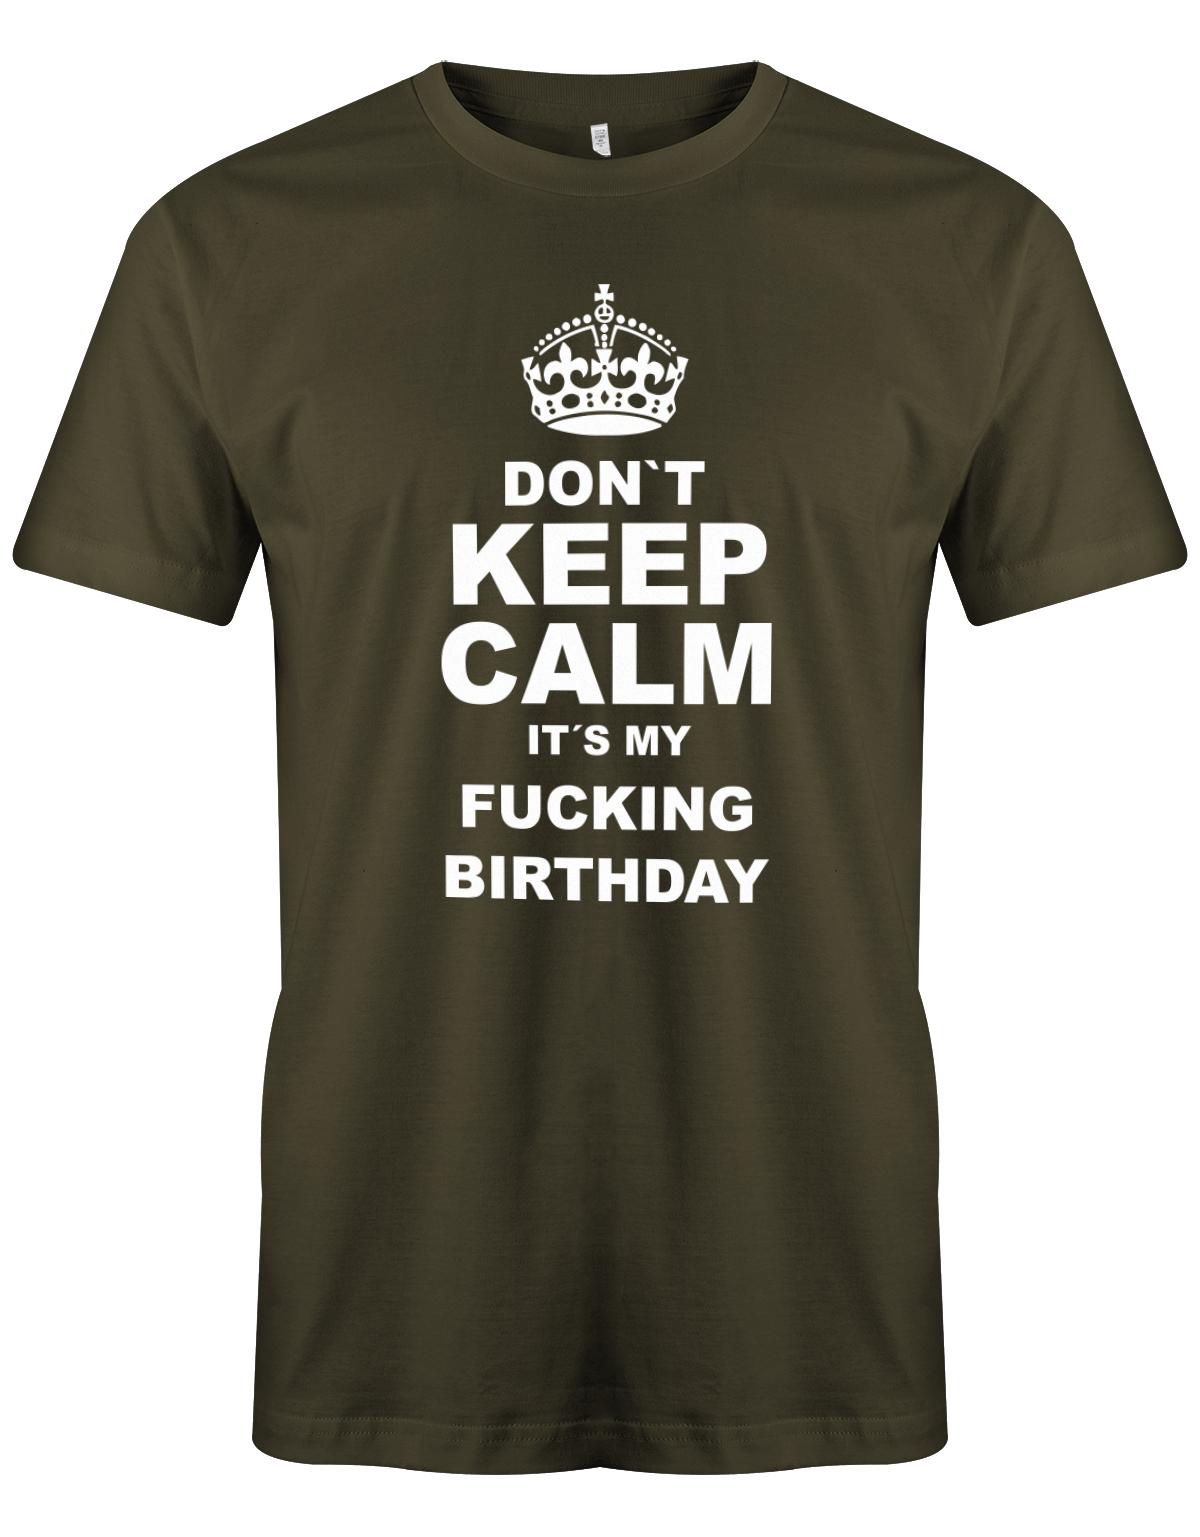 Dont-Keep-calm-is-my-fucking-Birthday-Herren-Shirt-Army